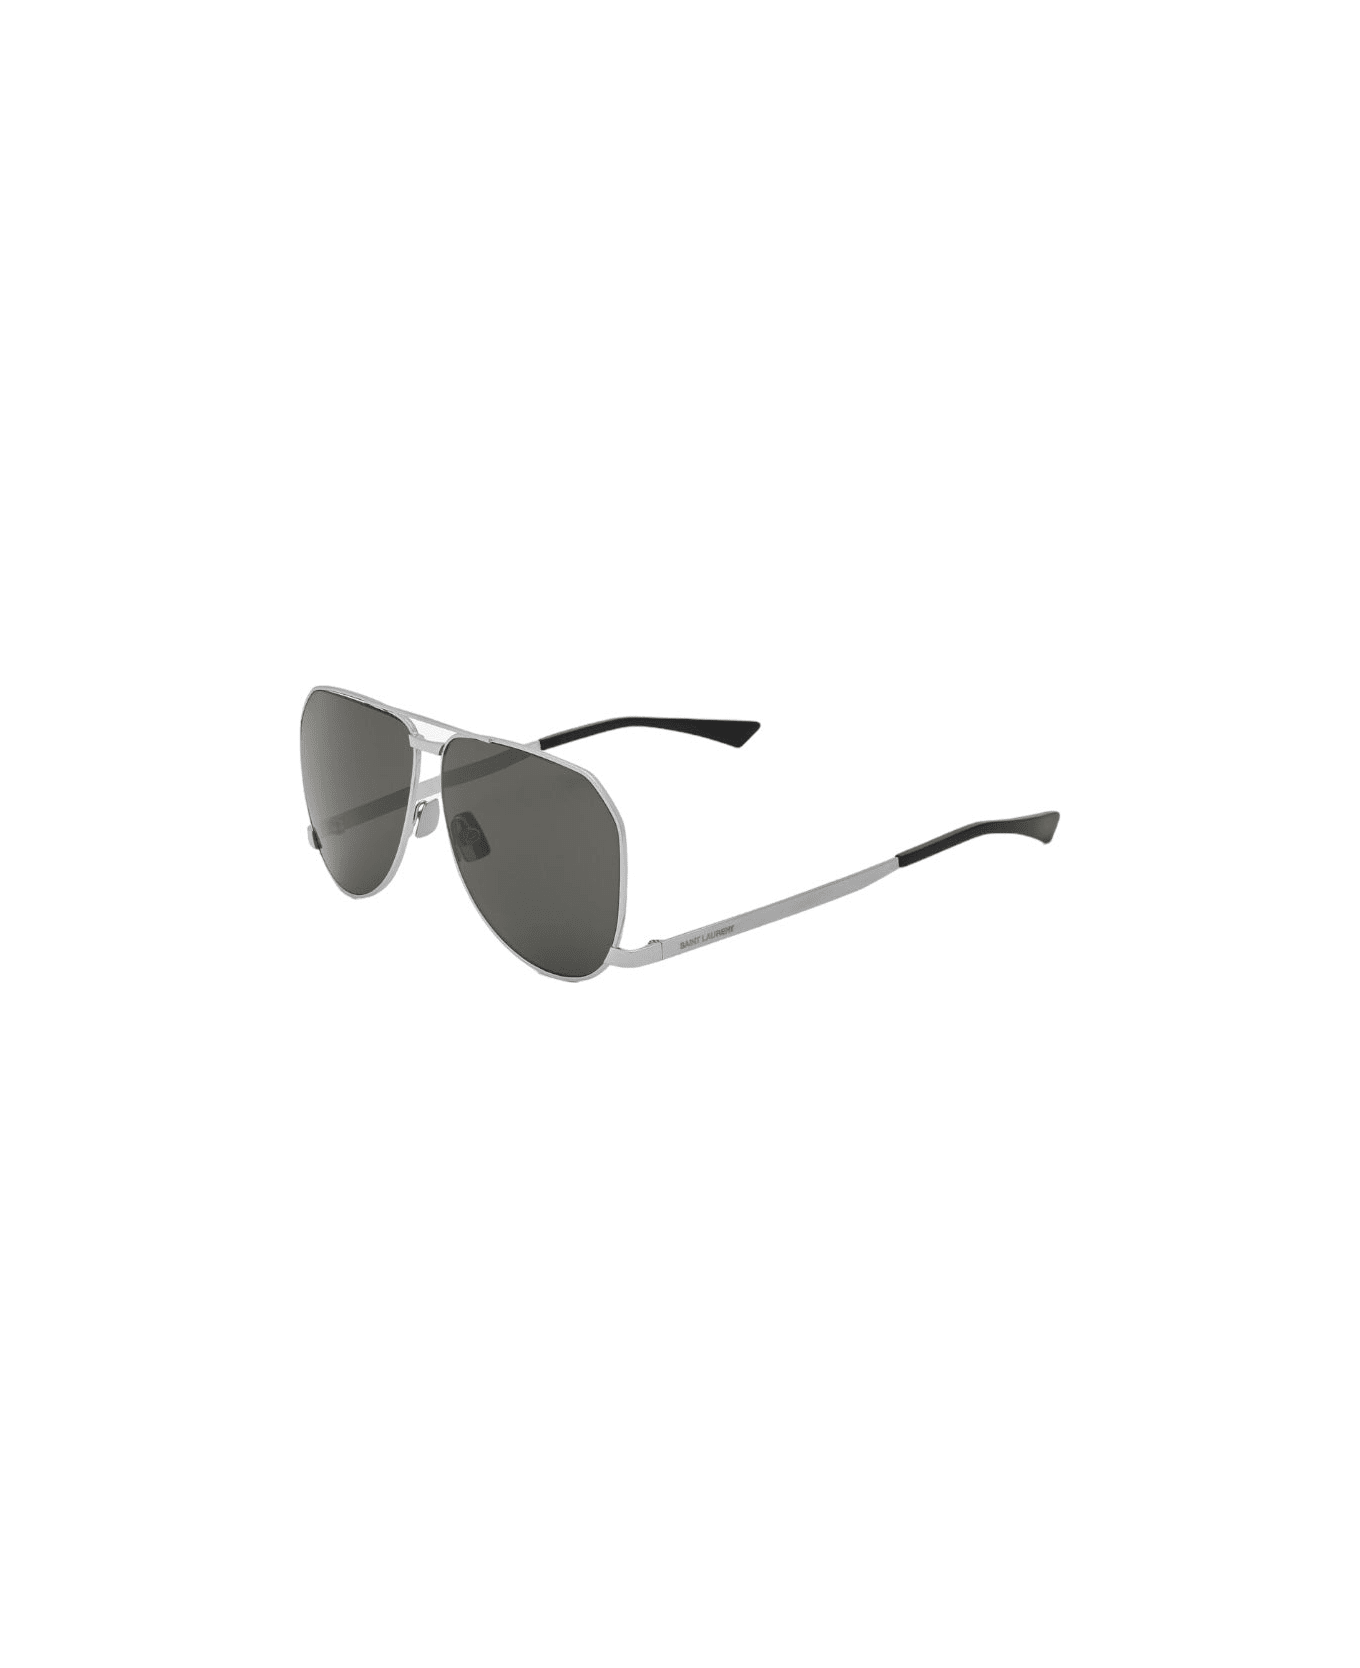 Saint Laurent Eyewear Sl 690 - Dust - Silver Sunglasses サングラス